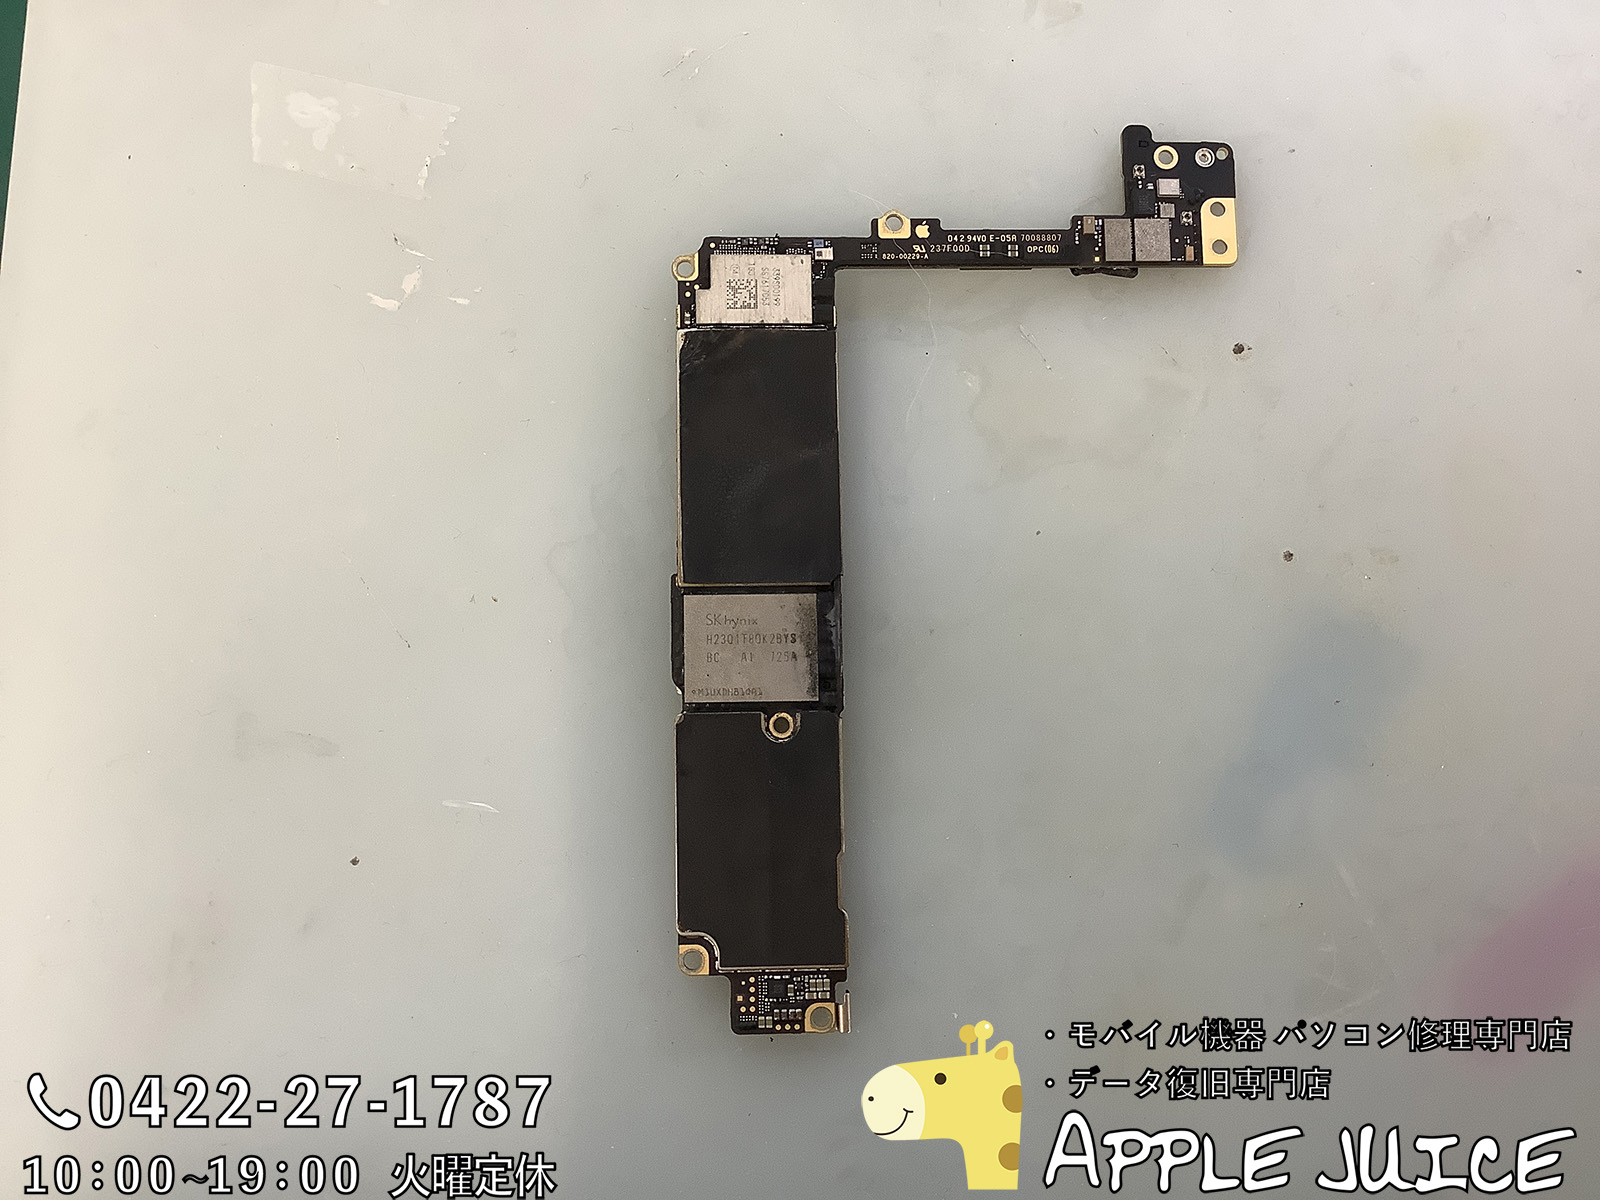 Iphone7 Plus のデータ救出 基板 基盤 修理 データ復旧はapplejuice Iphone Ipad Ipod Mac修理 データ復旧 基板修理 Applejuice吉祥寺店